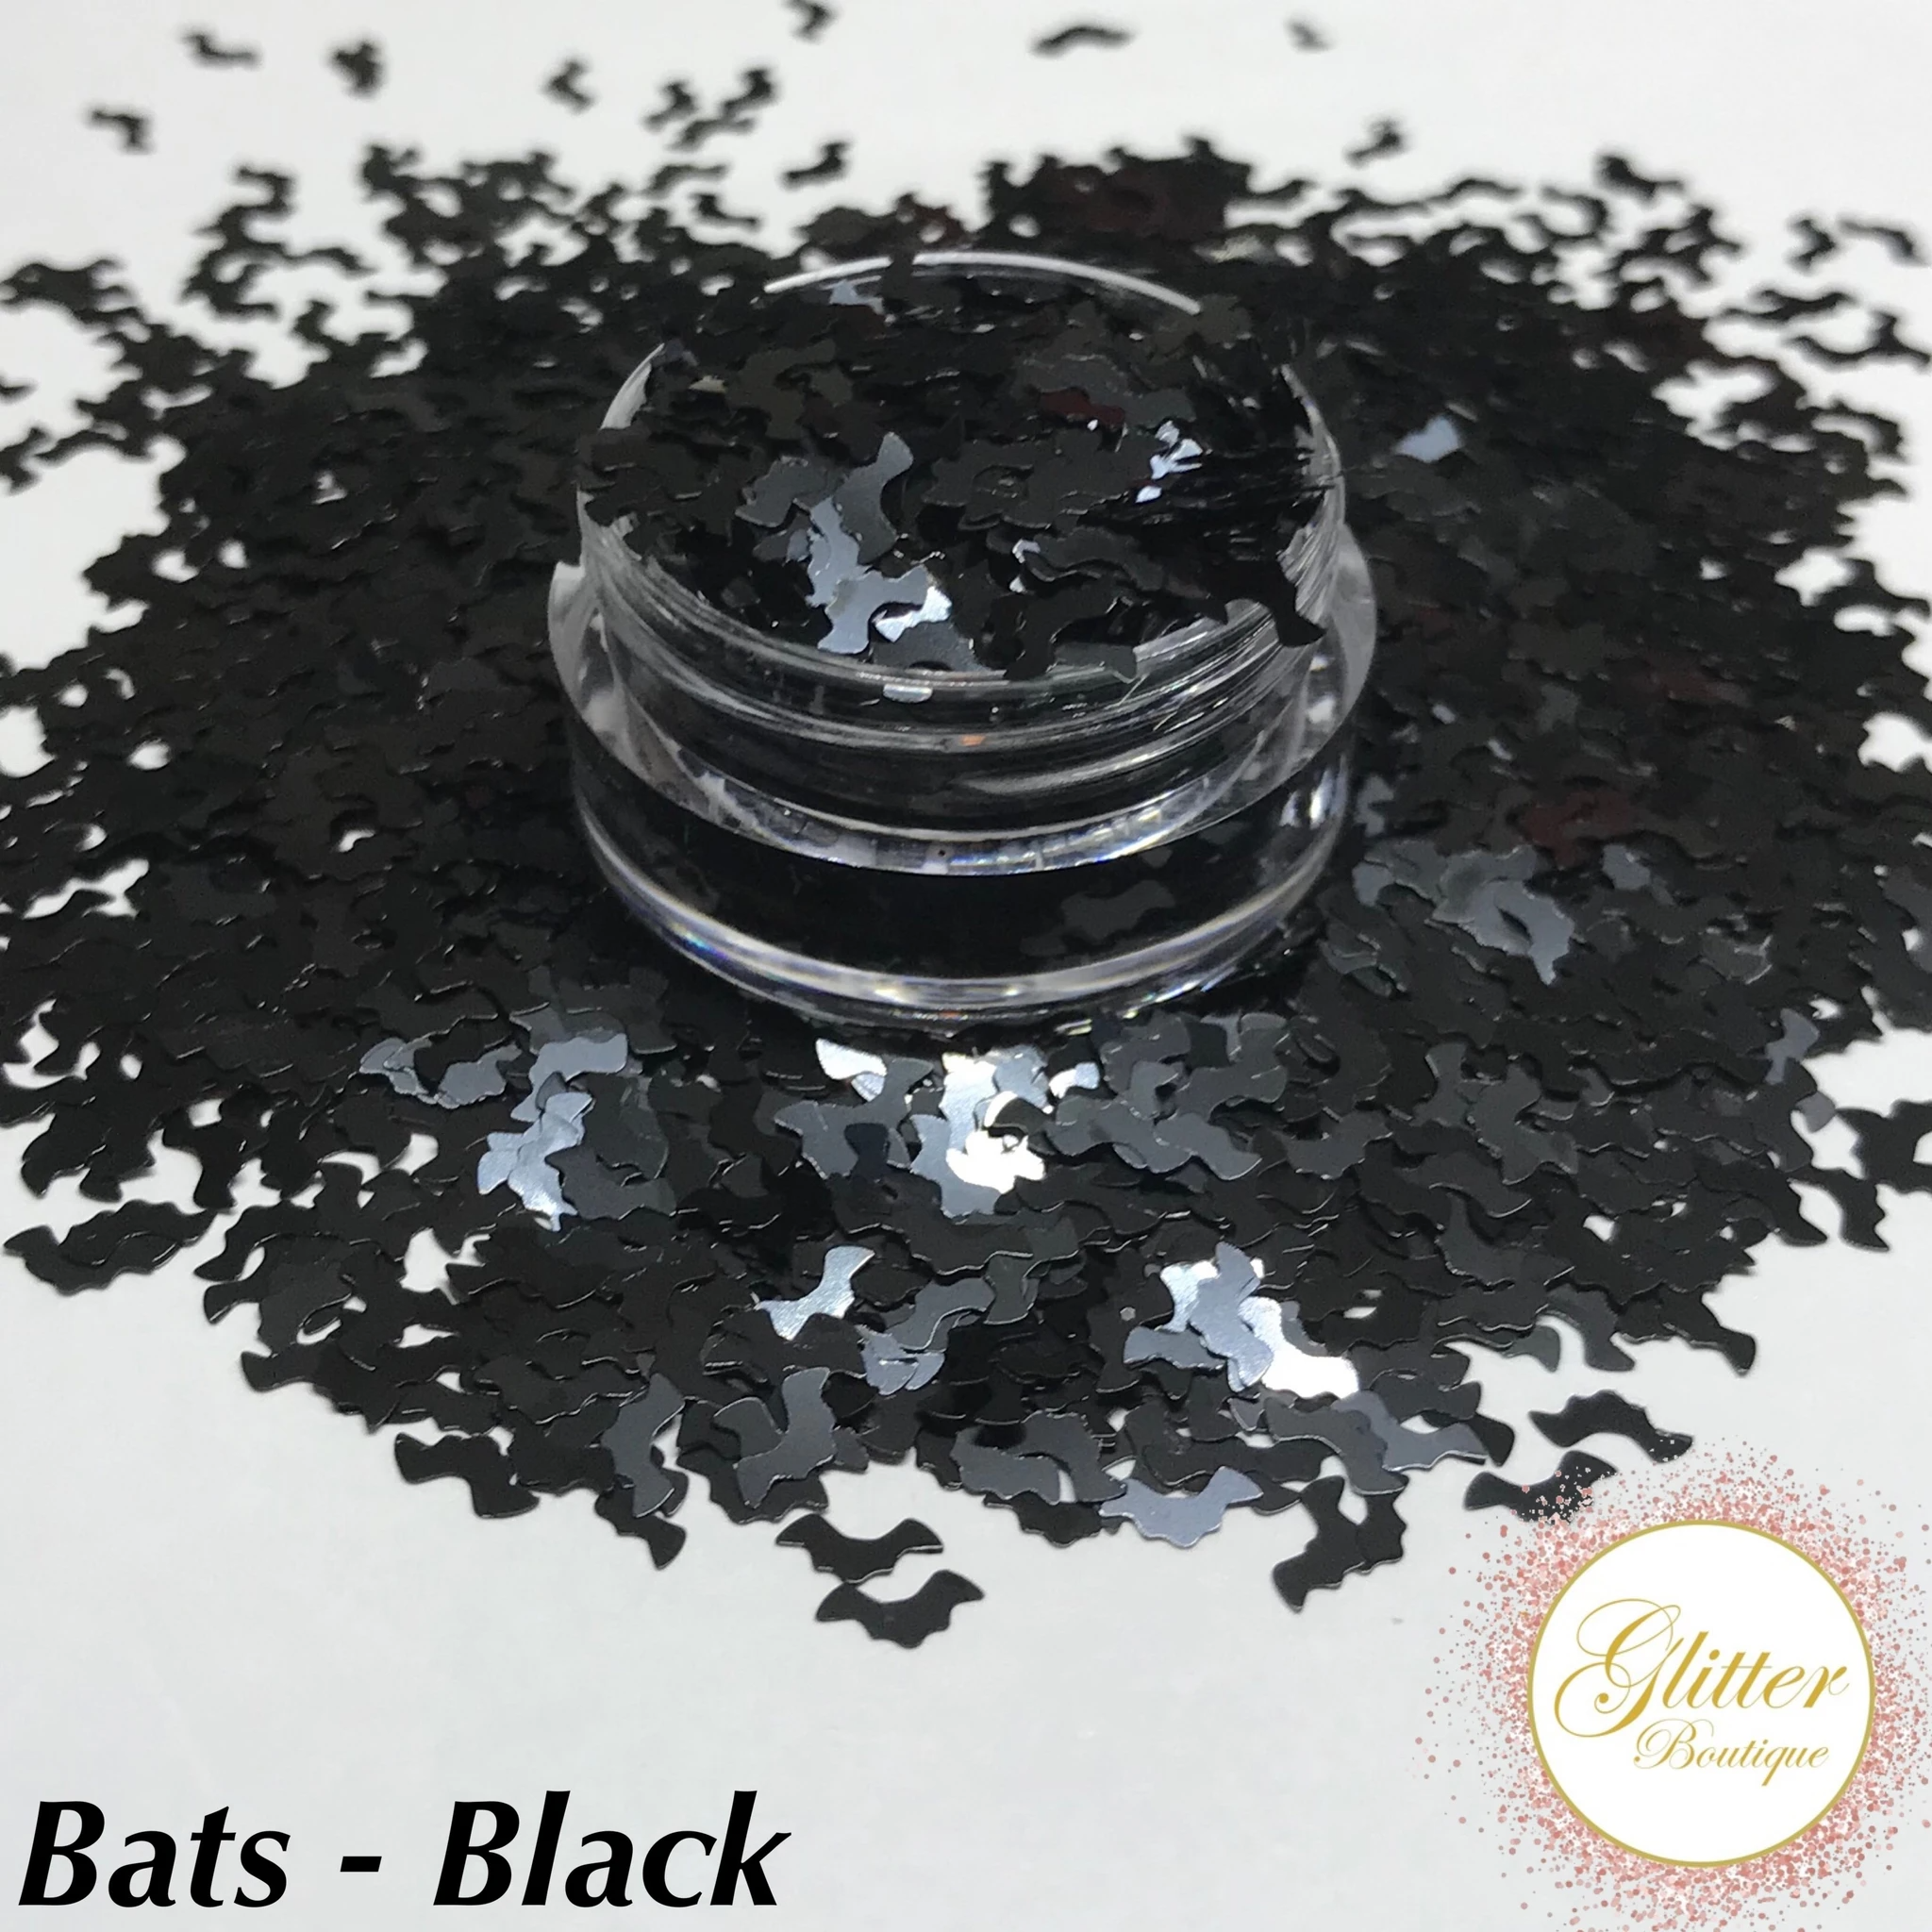 Glitter Boutique - Black Bats - Creata Beauty - Professional Beauty Products